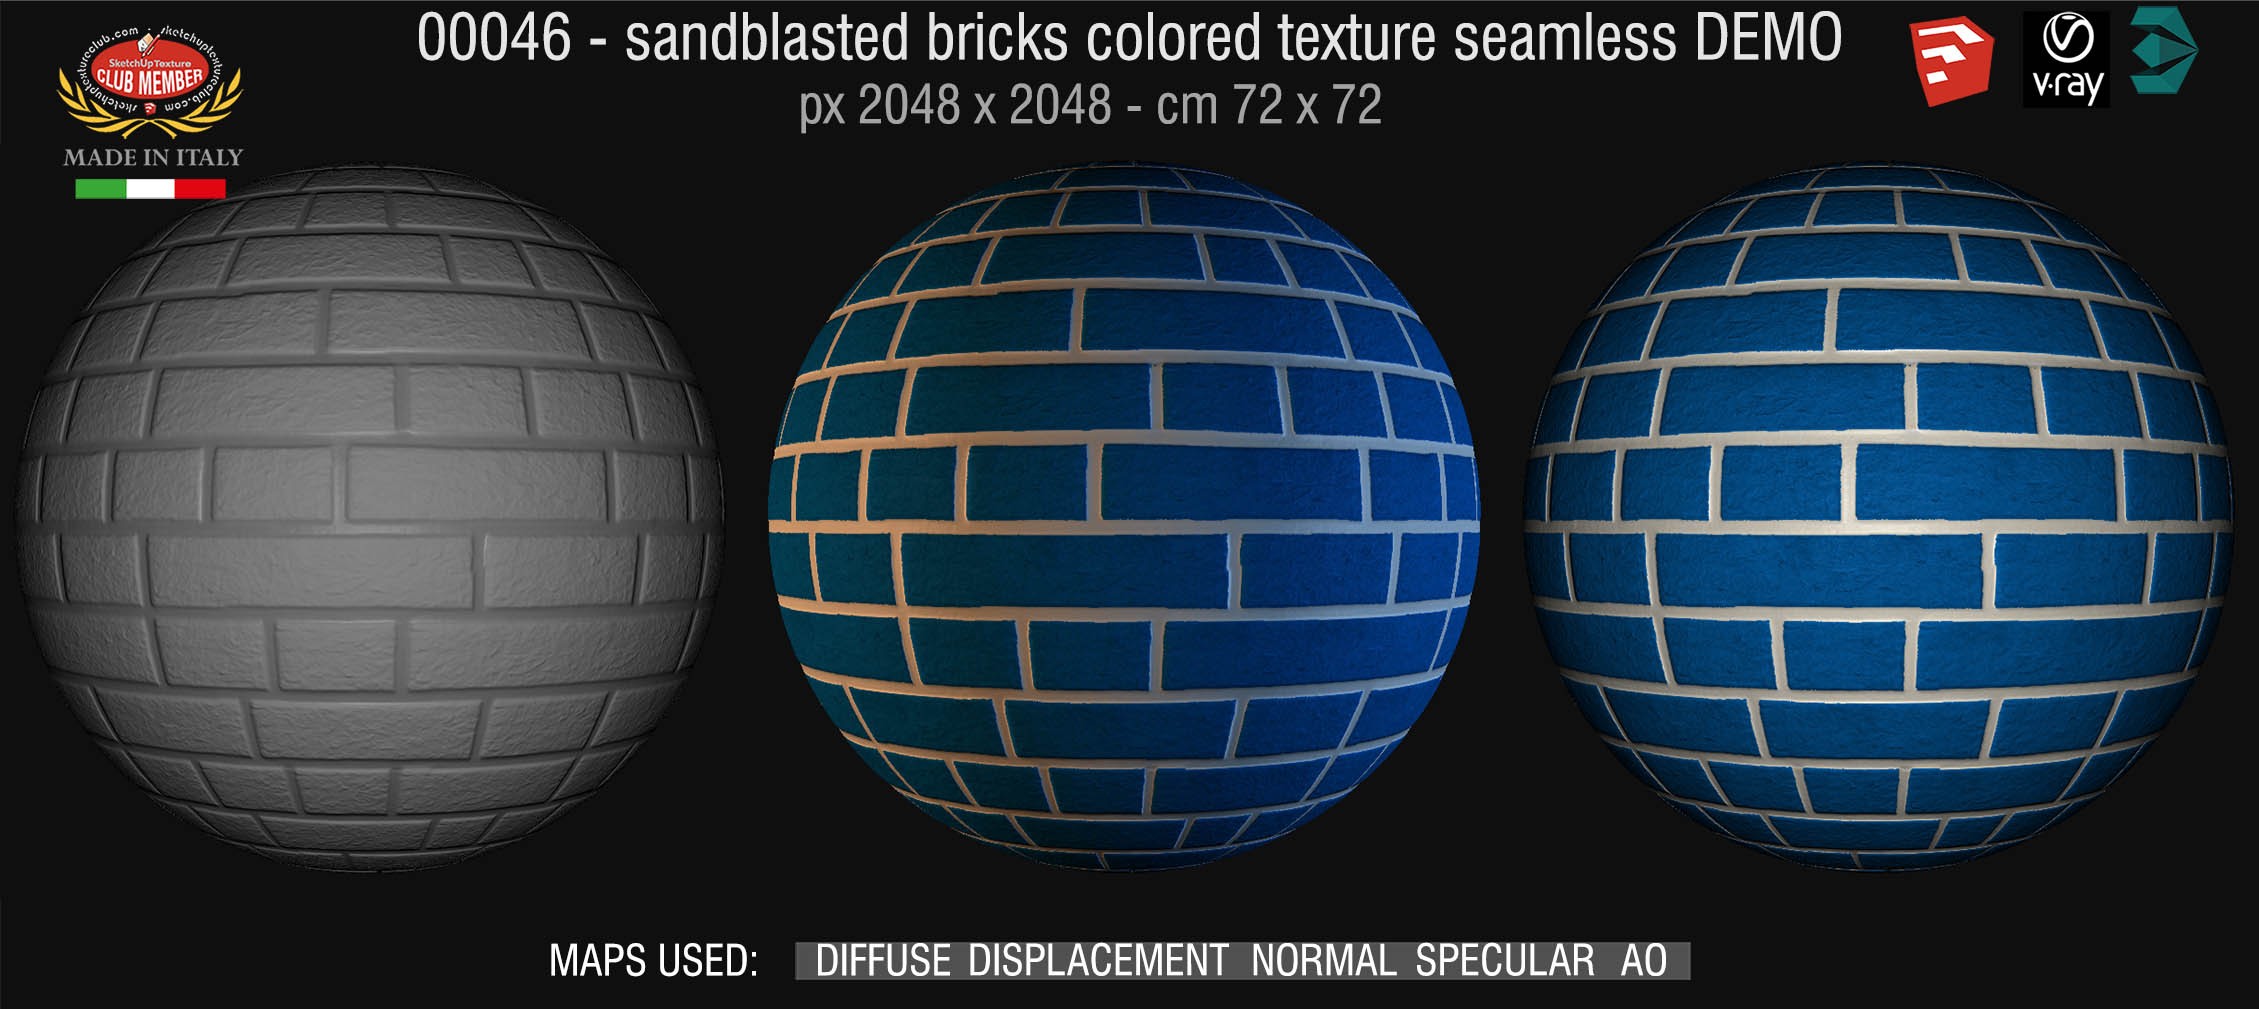 00046 Sandblasted bricks colored texture seamless + maps DEMO